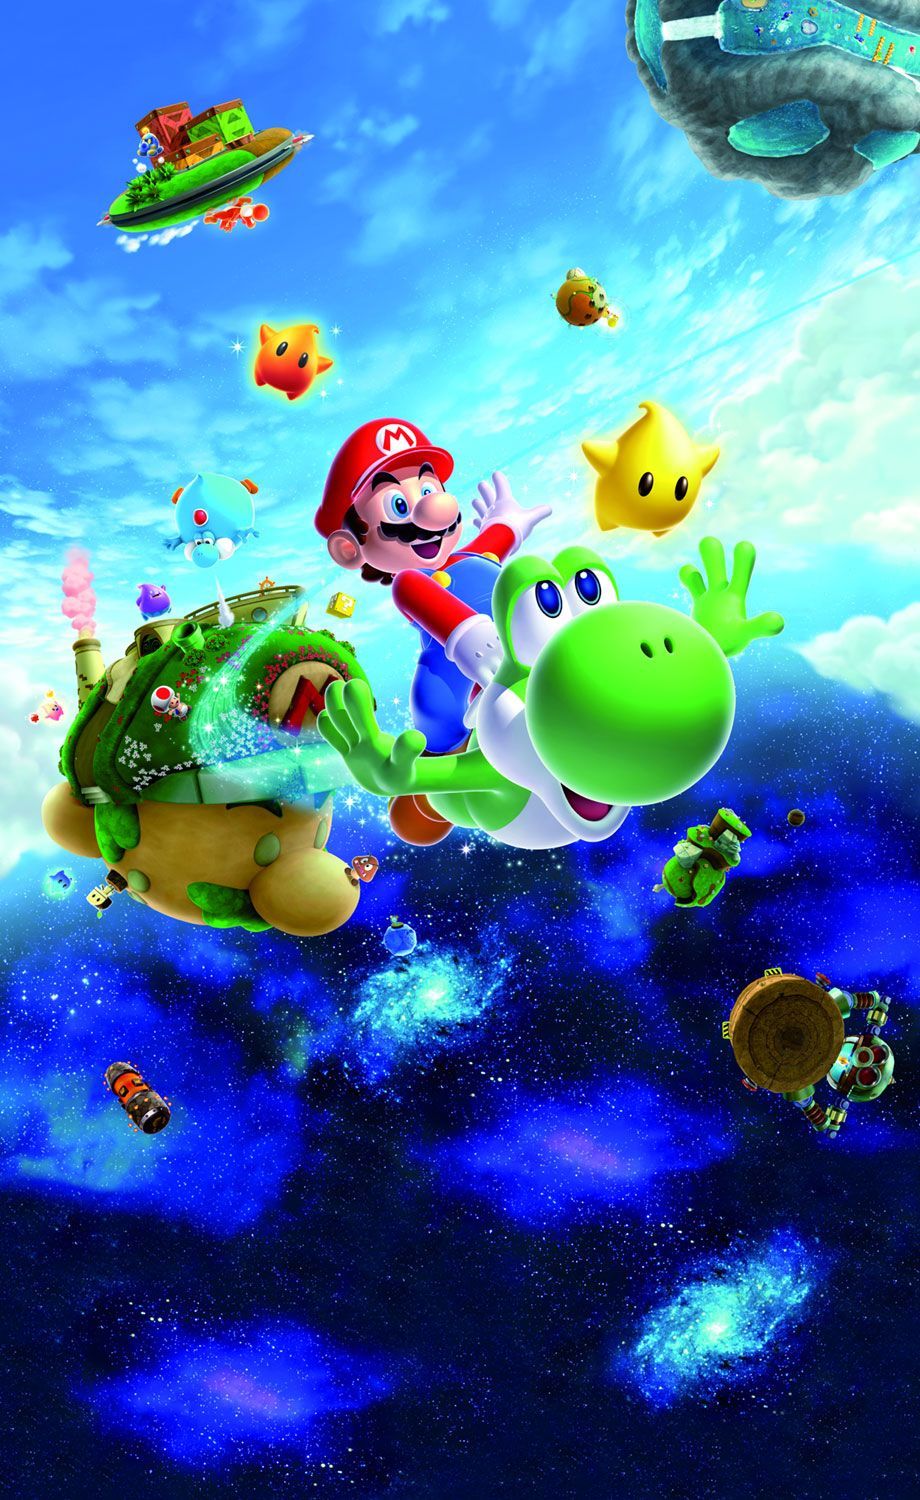 Main Illustration & Art Mario Galaxy 2